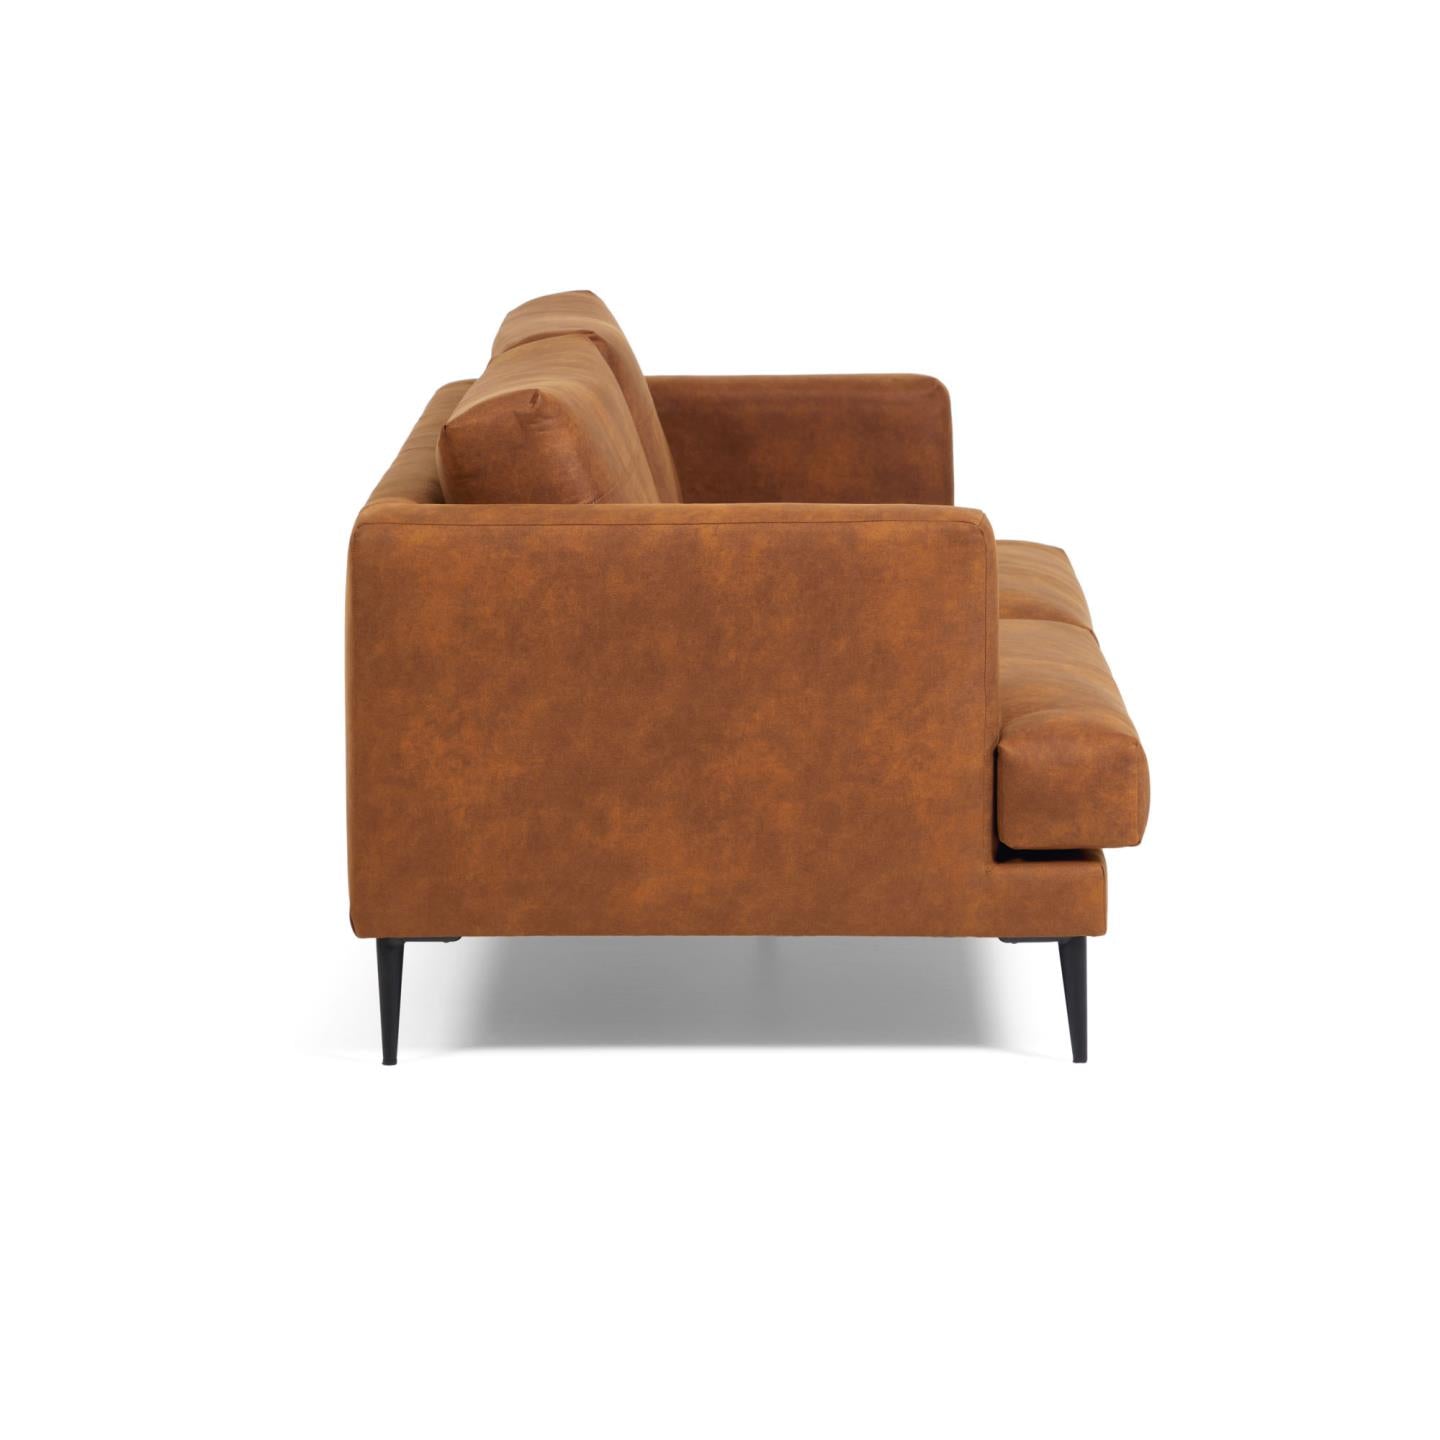 Tanya 2 seater sofa upholstered in light brown, 183 cm